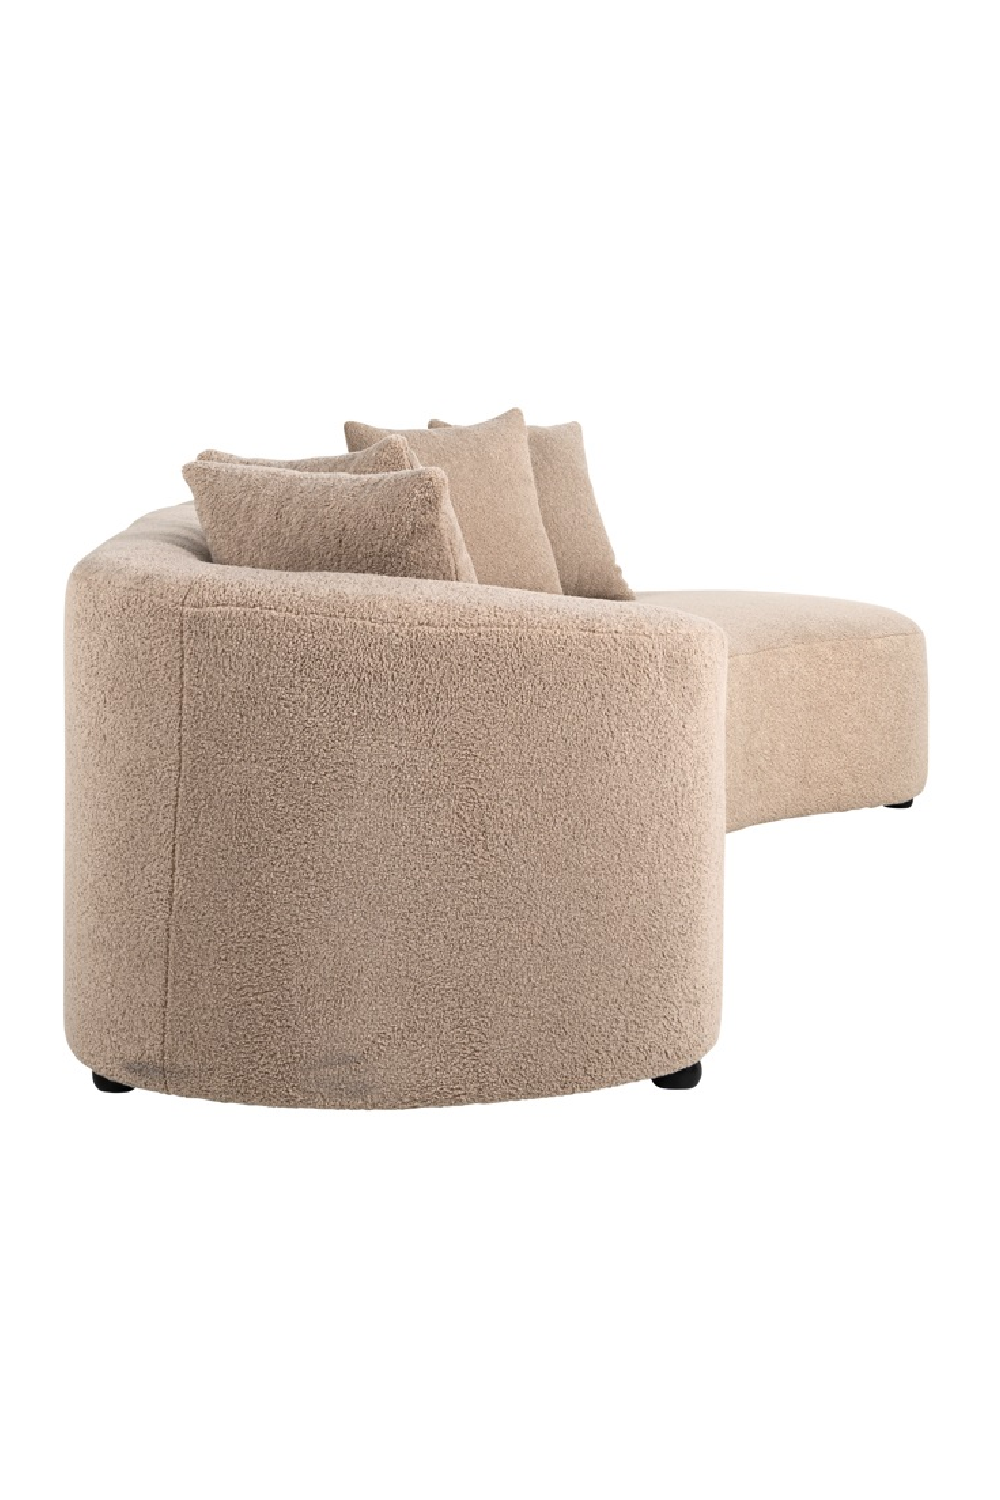 Brown Curve Upholstered Sofa | OROA Grayson | Oroa.com